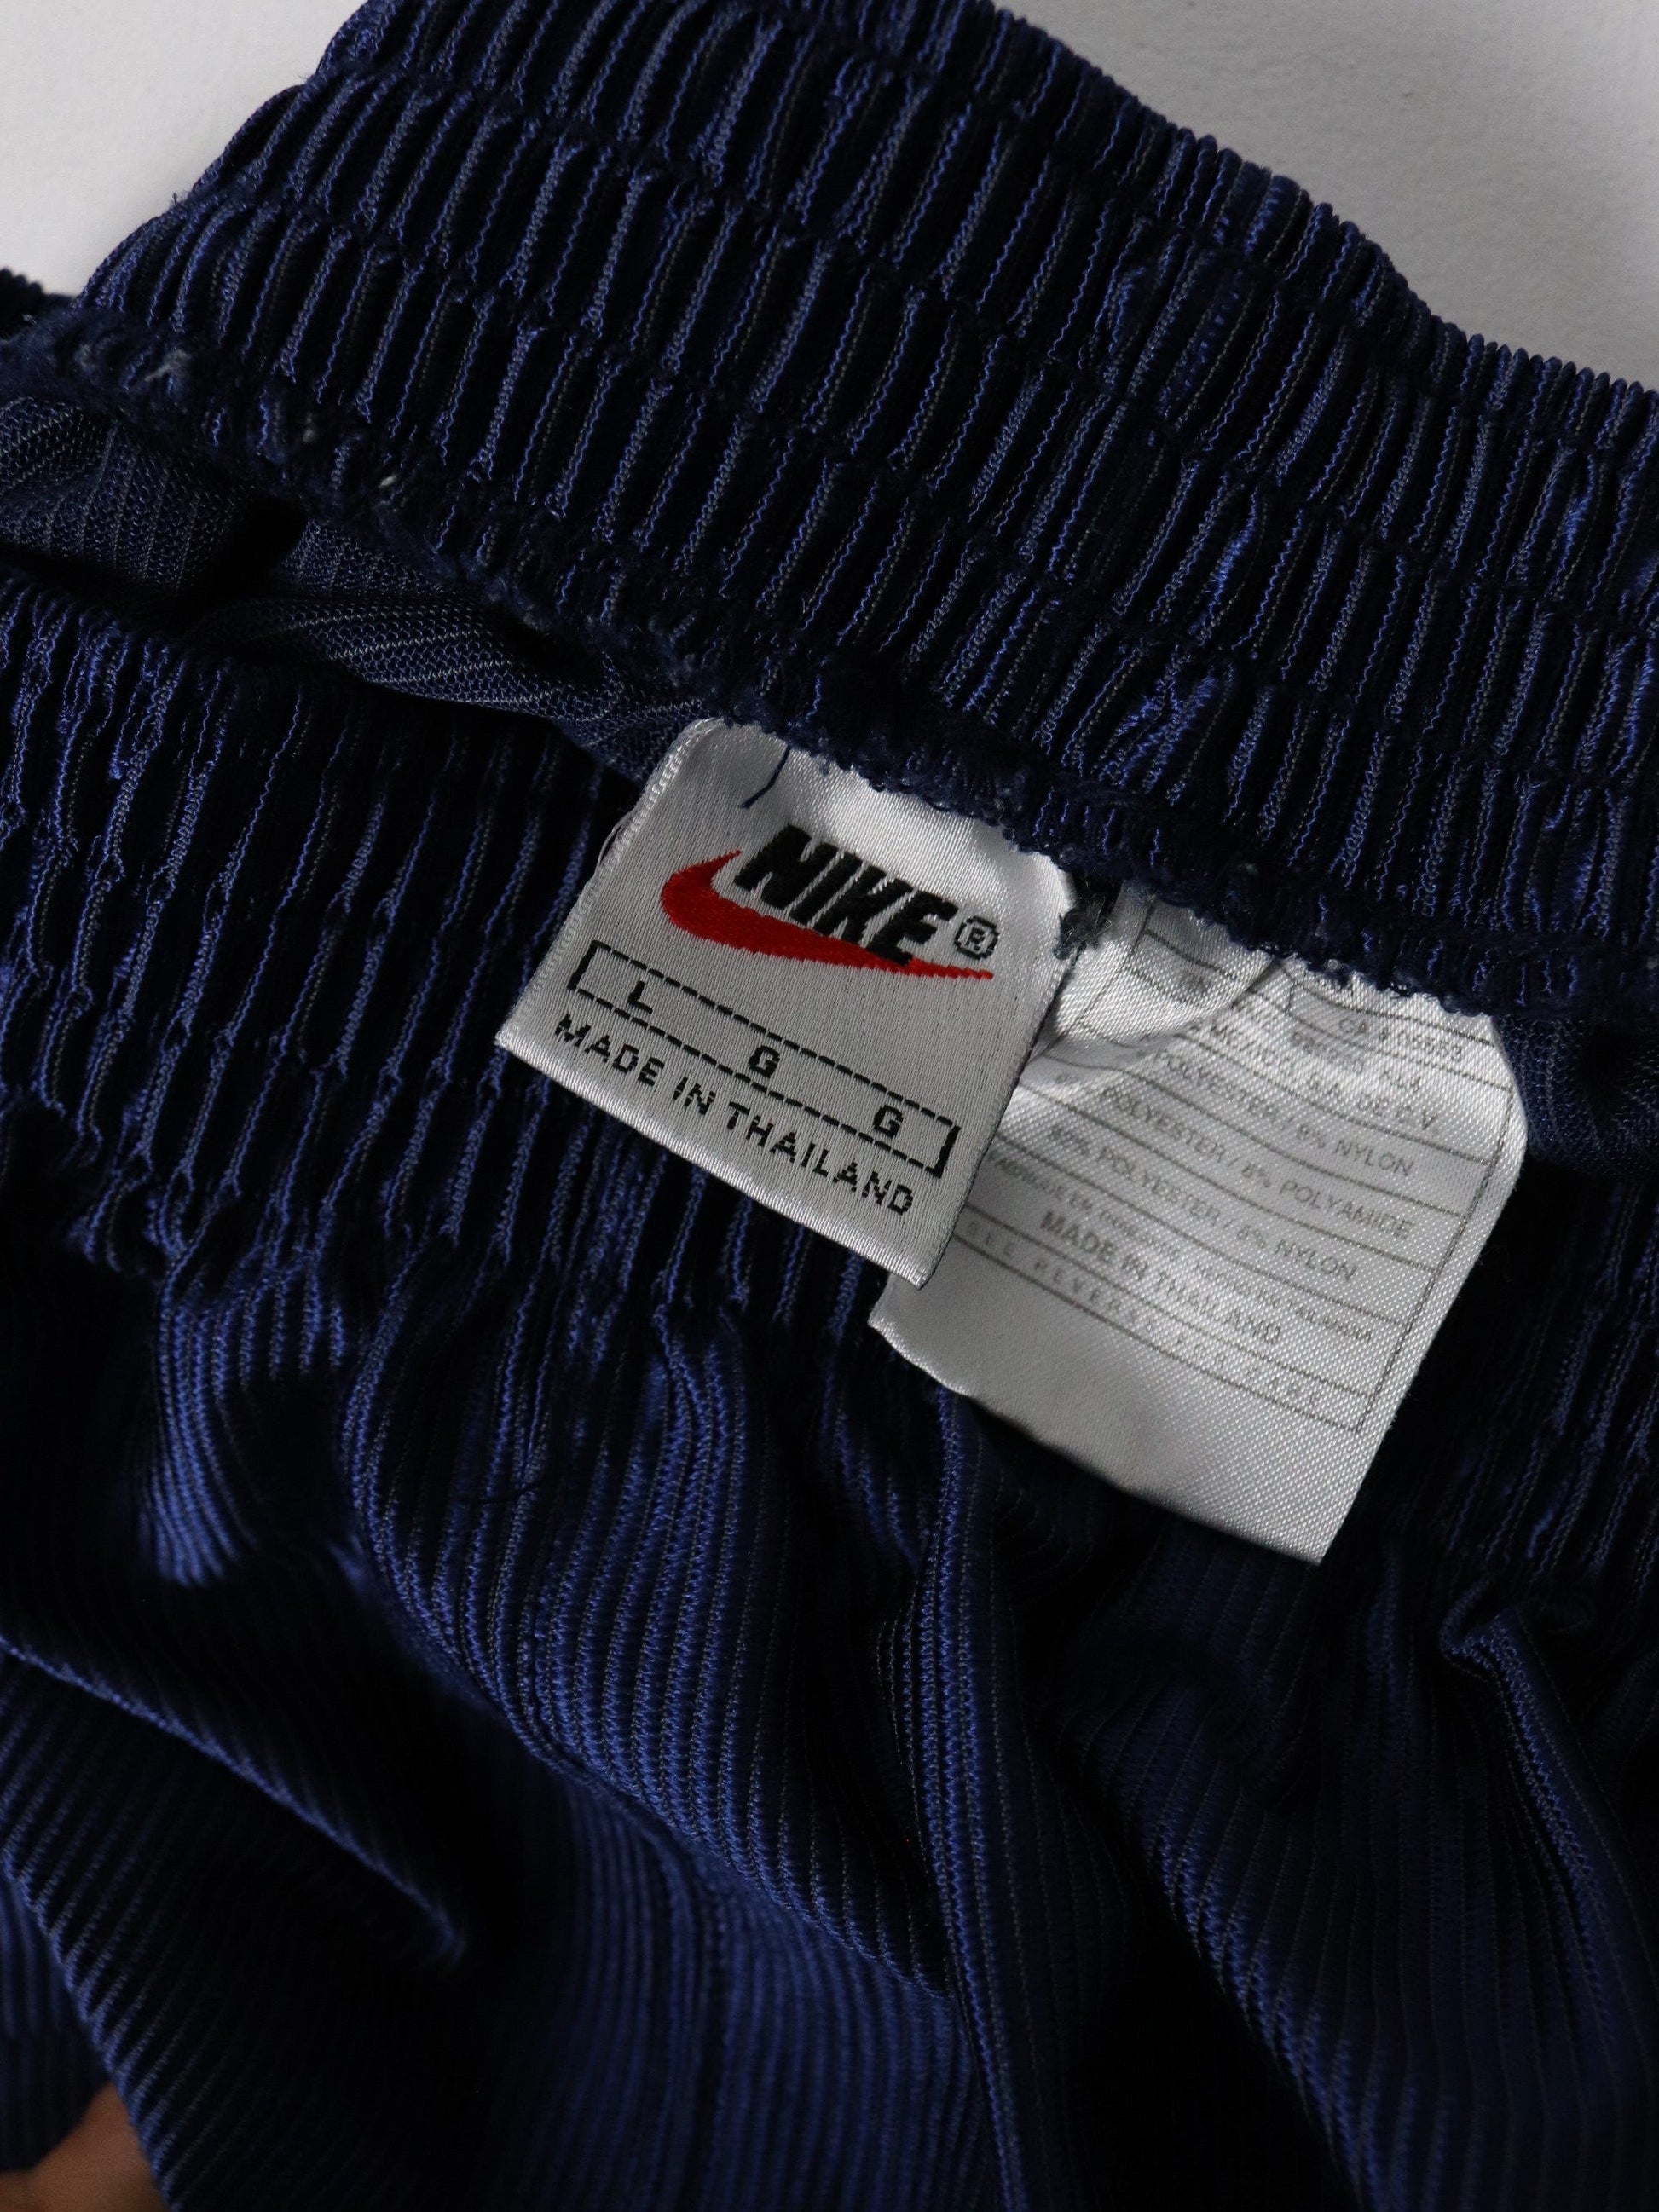 Nike Pants Vintage Nike Pants Youth Large Blue Tearaways 90s Athletic Track Sweat 26 x 27